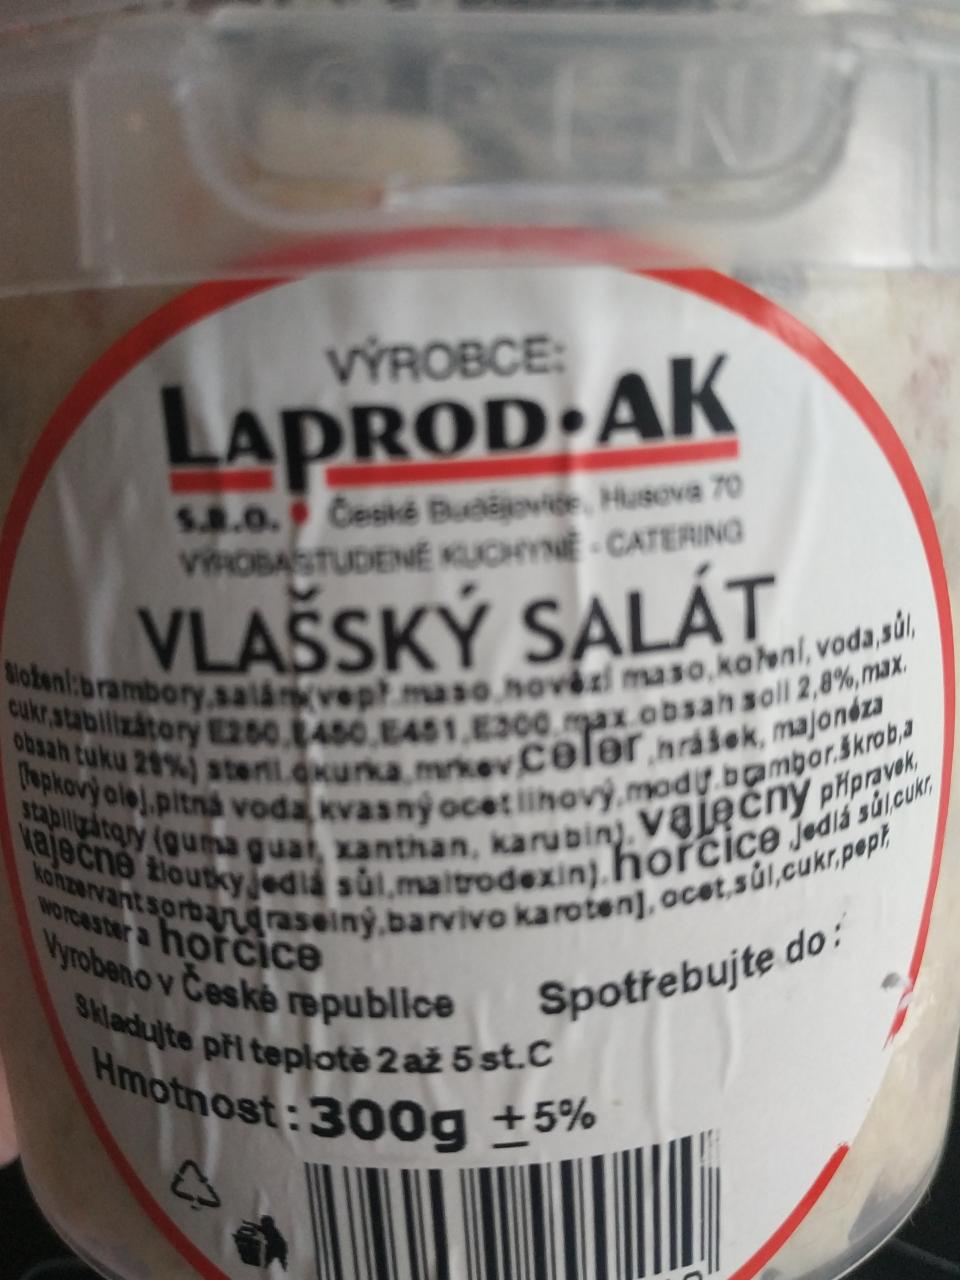 Fotografie - Vlašský salát Laprod-AK